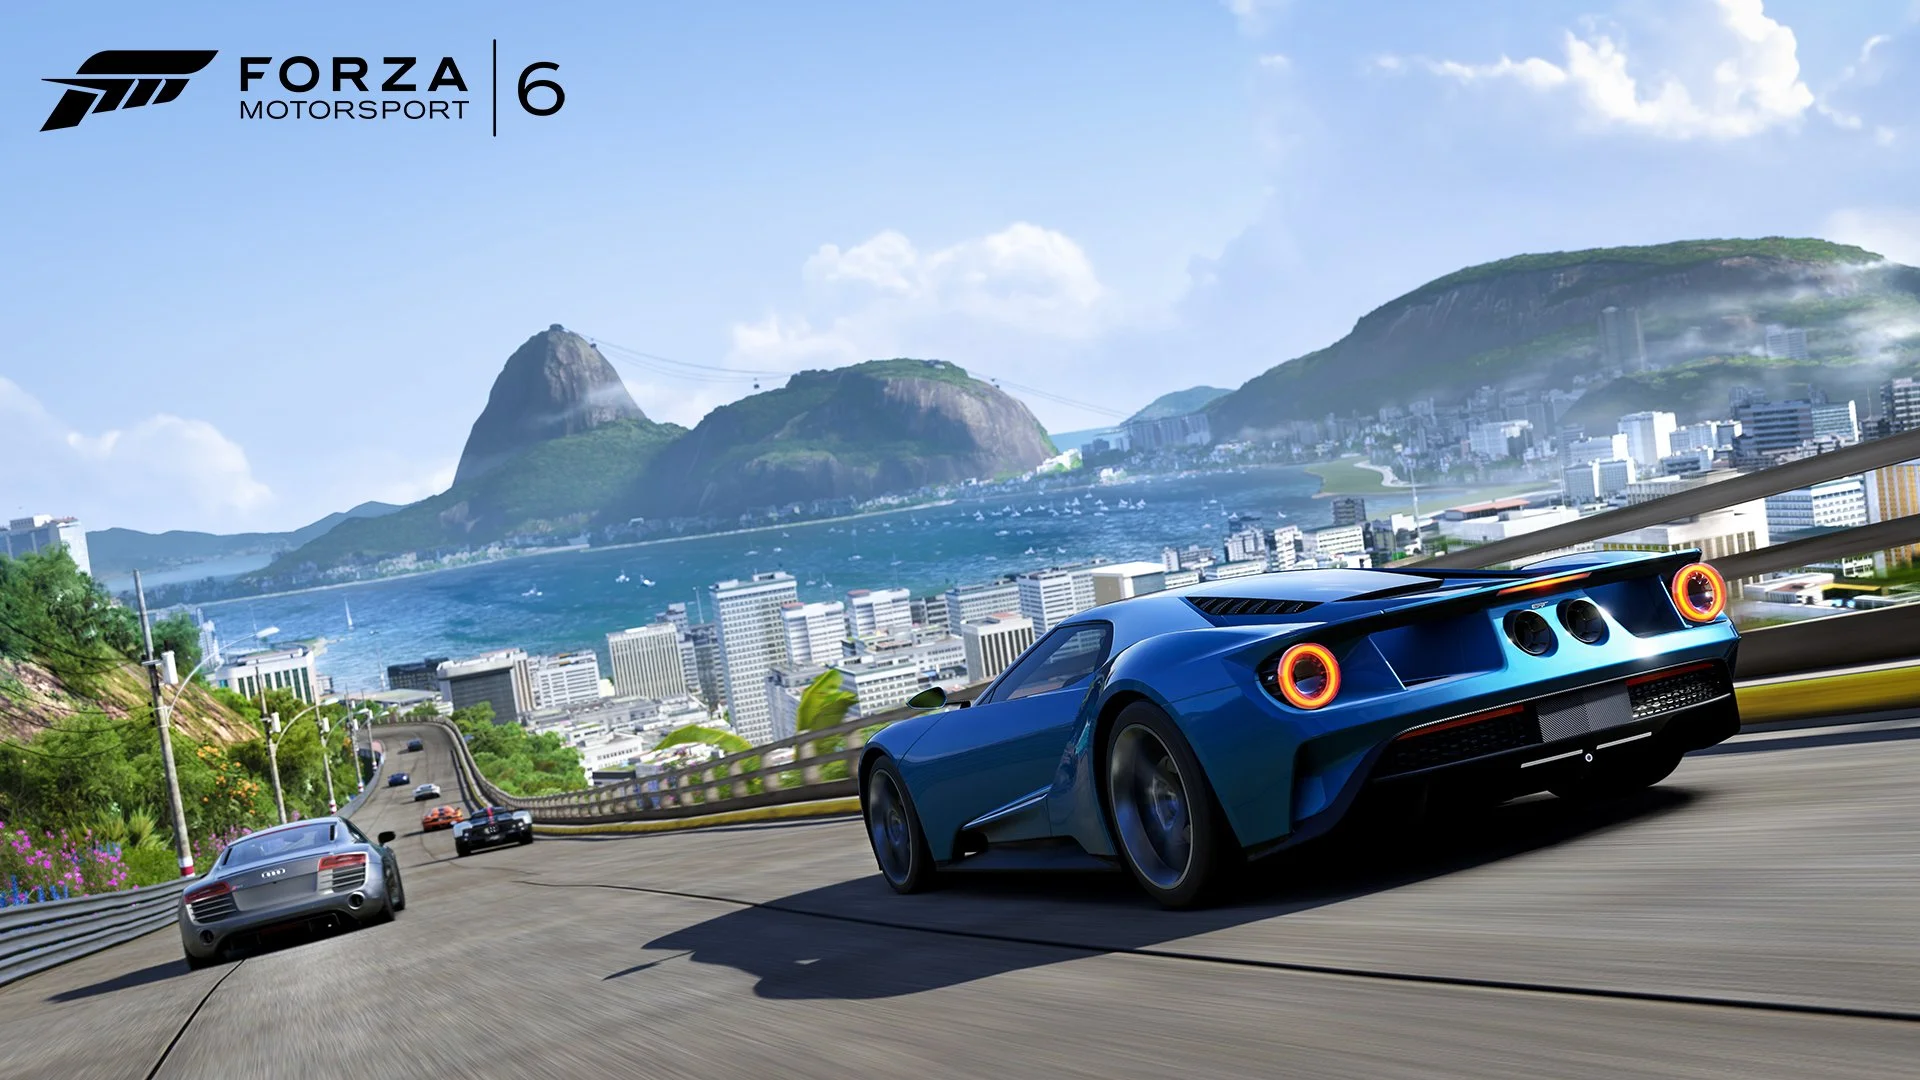 Главная причина для покупки Forza Motorsport 6 — вибрация джойстика  - фото 2